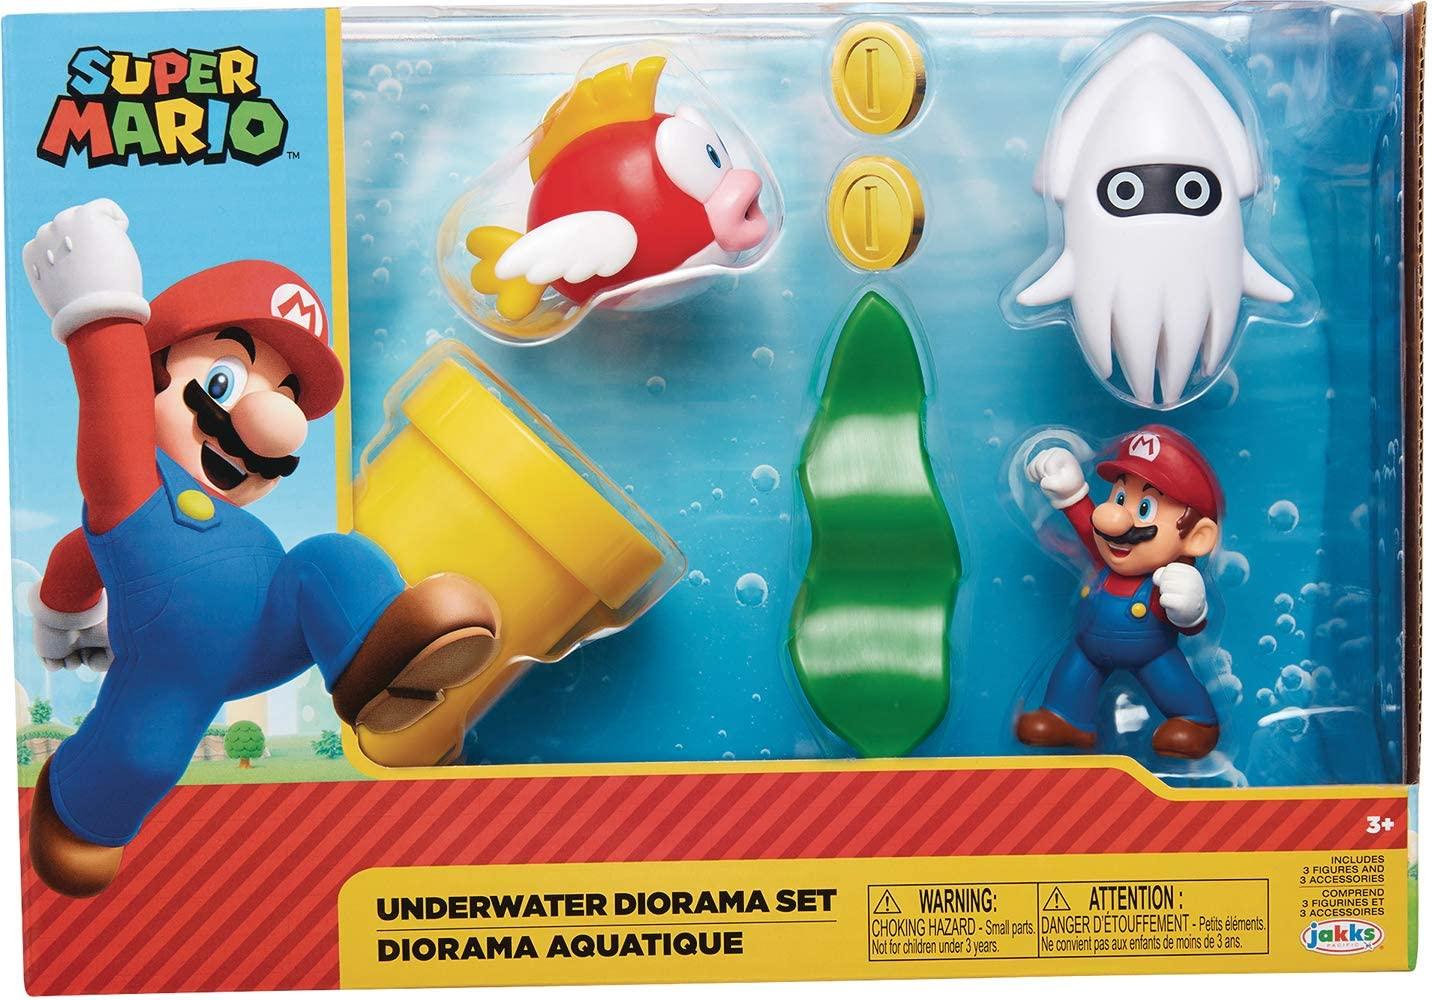 Super Mario Nintendo Underwater Diorama Play Set for $14.40